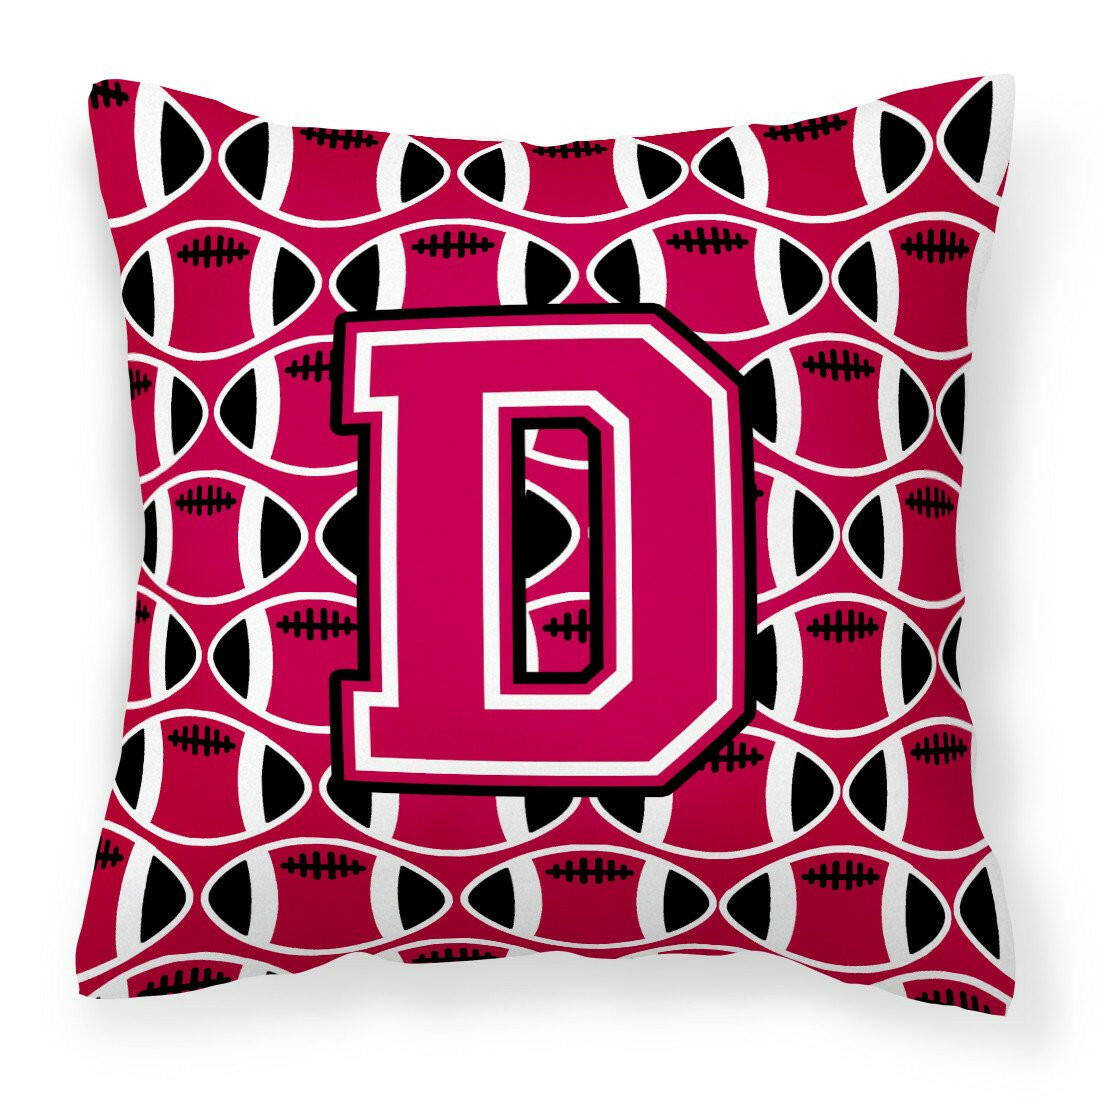 Letter D Football Crimson and White Fabric Decorative Pillow CJ1079-DPW1414 by Caroline's Treasures